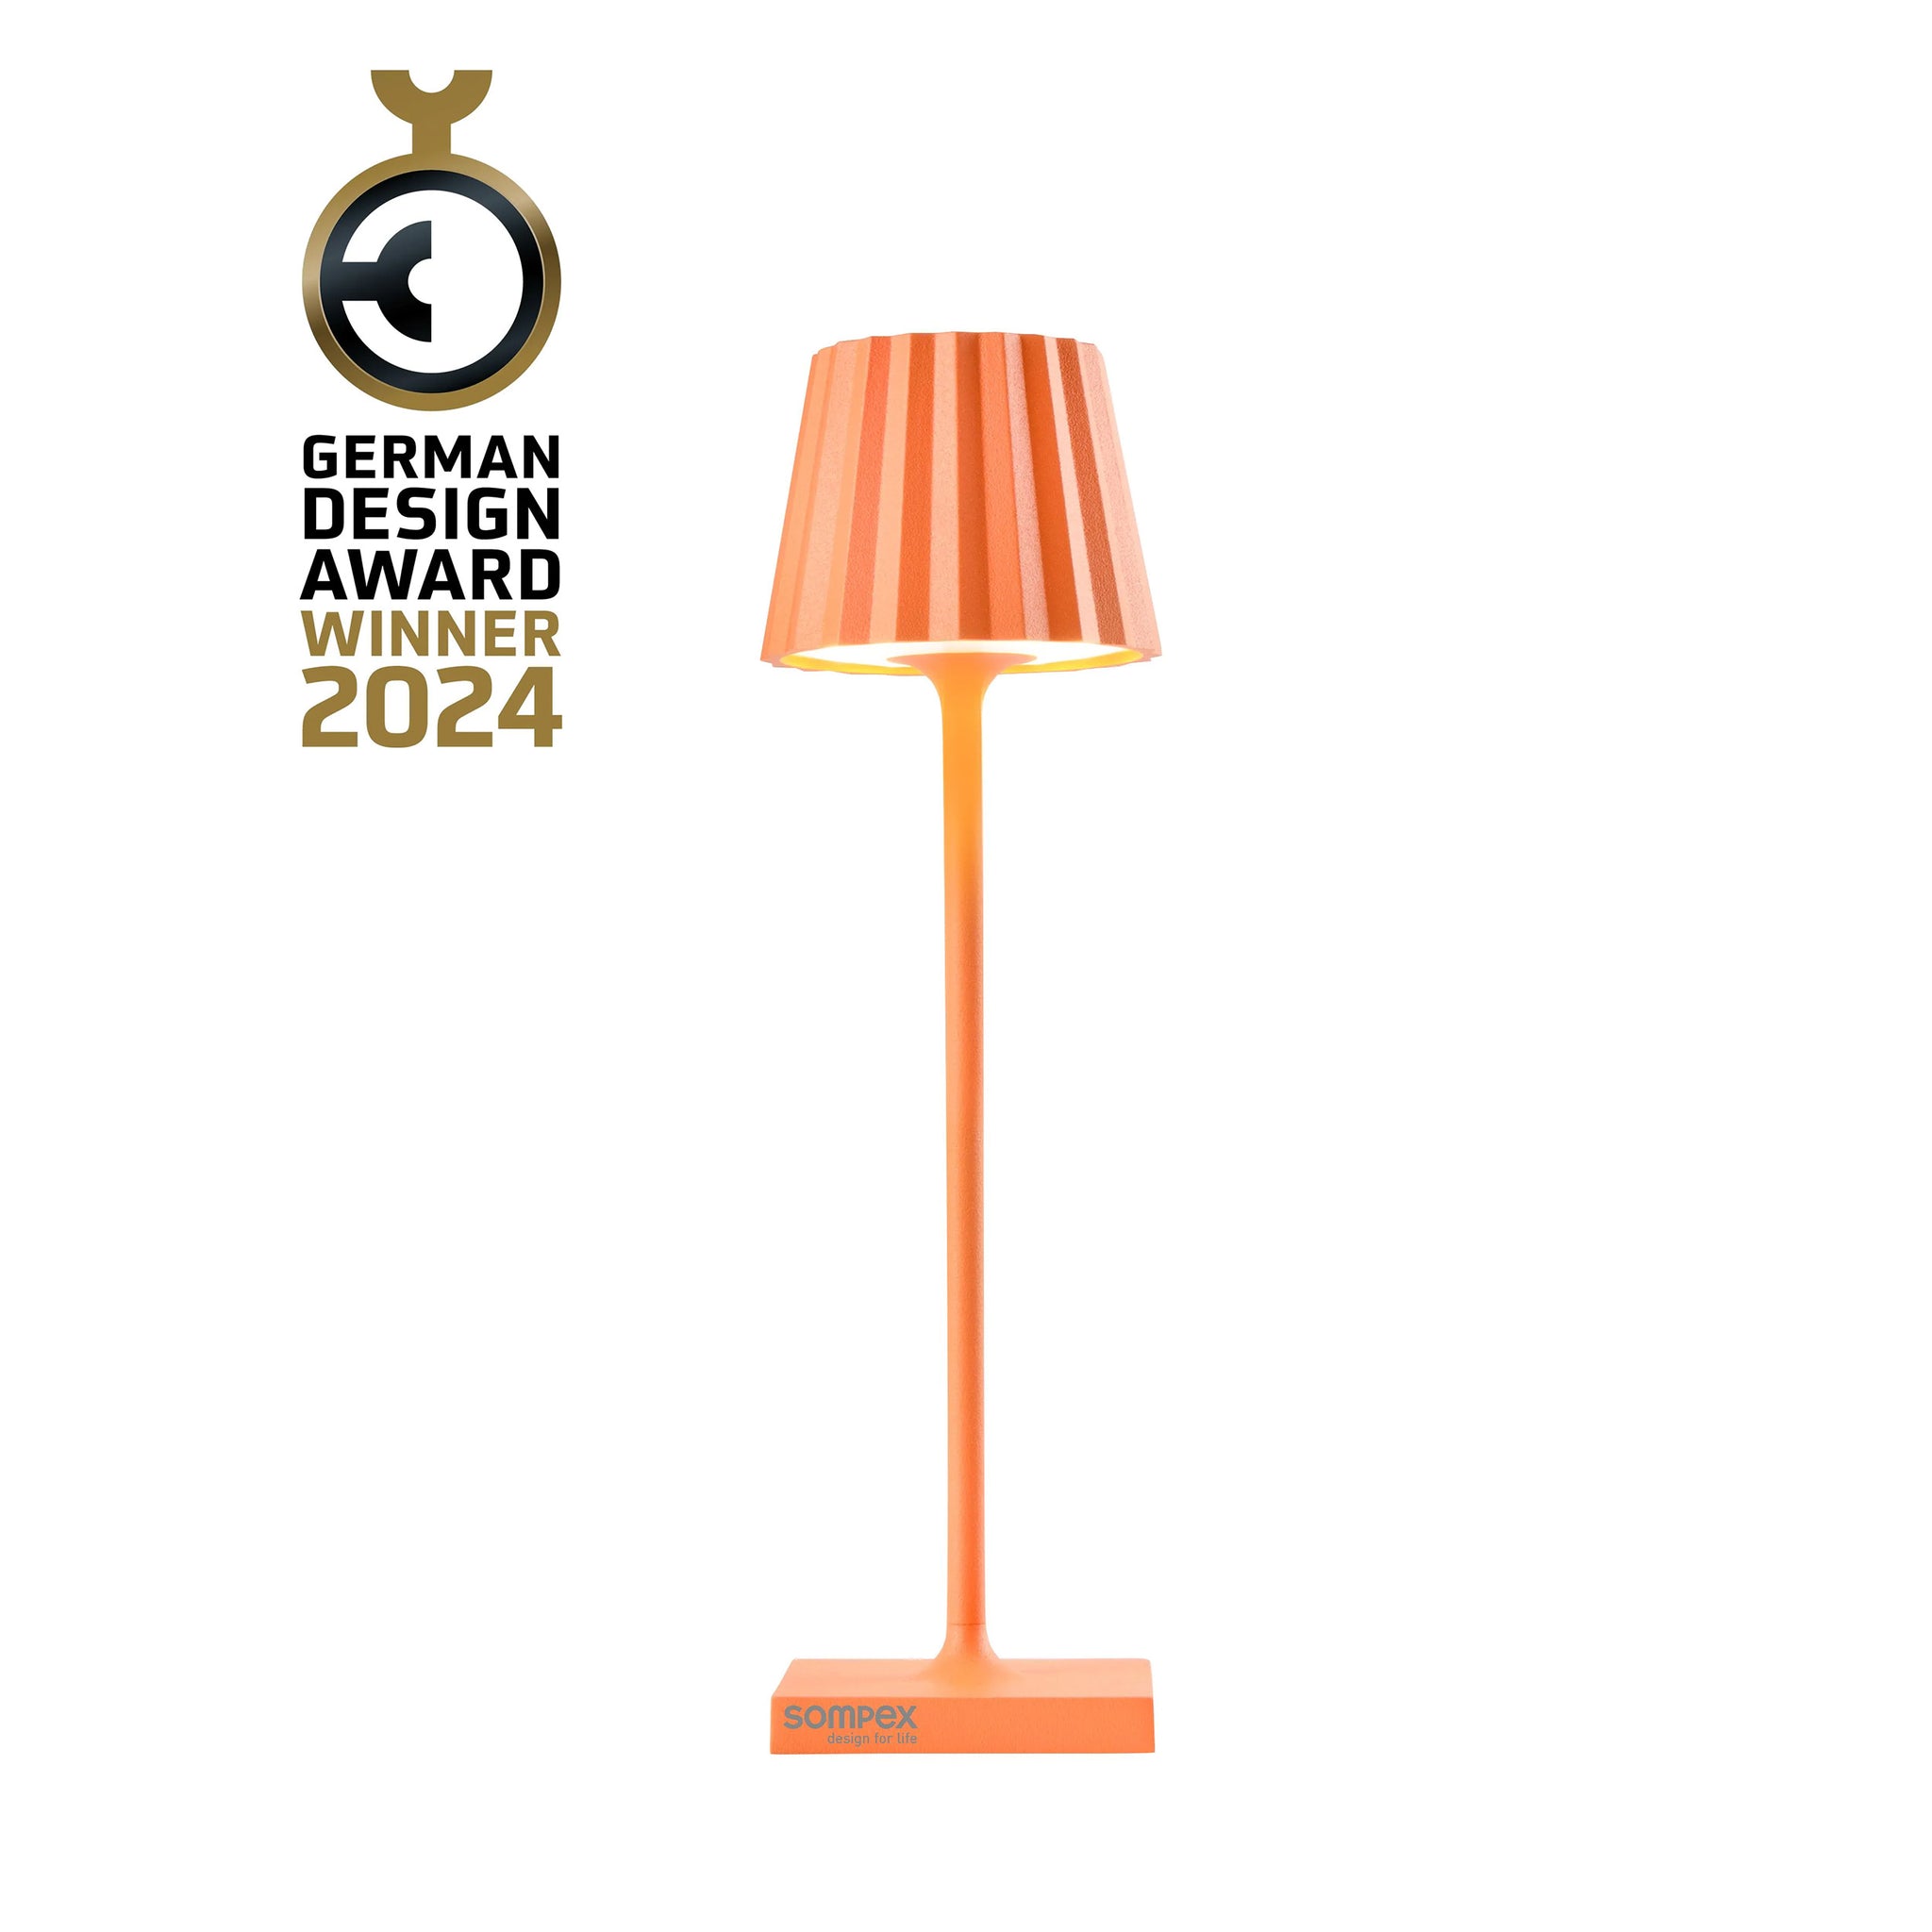 Sompex Troll Nano Oranje│Oplaadbare Tafellamp│Buitenverlichting│art. 78576│met logo German Design Award Winner 2024